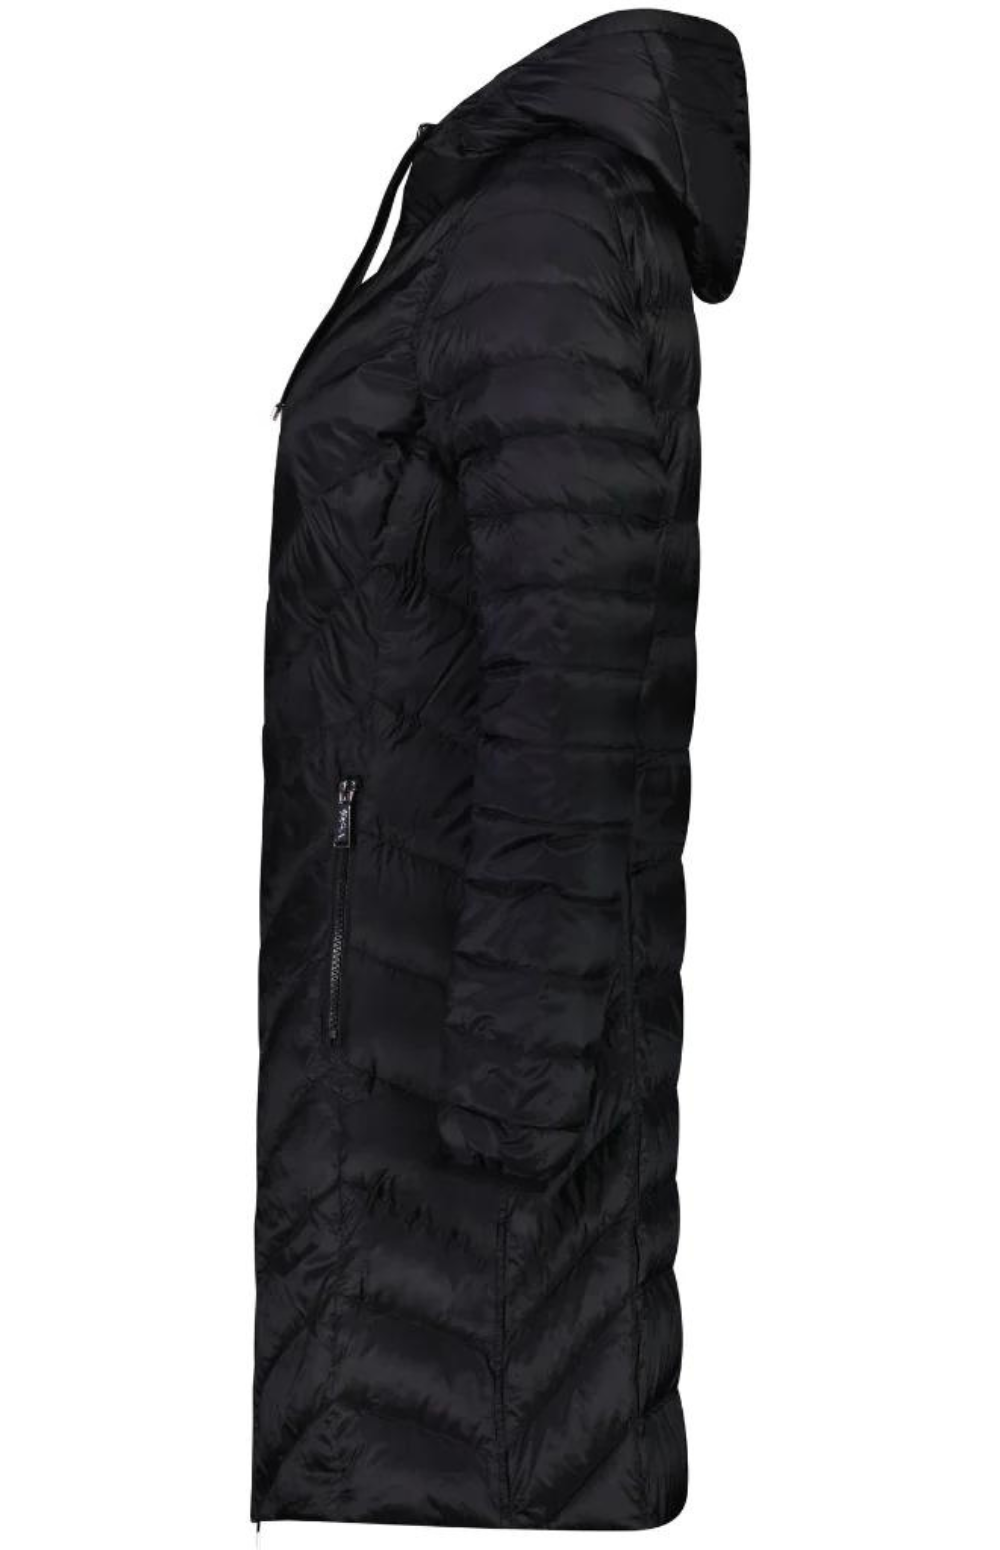 Moké - Arnie Women's Reversible Coat in Black/Houndstooth